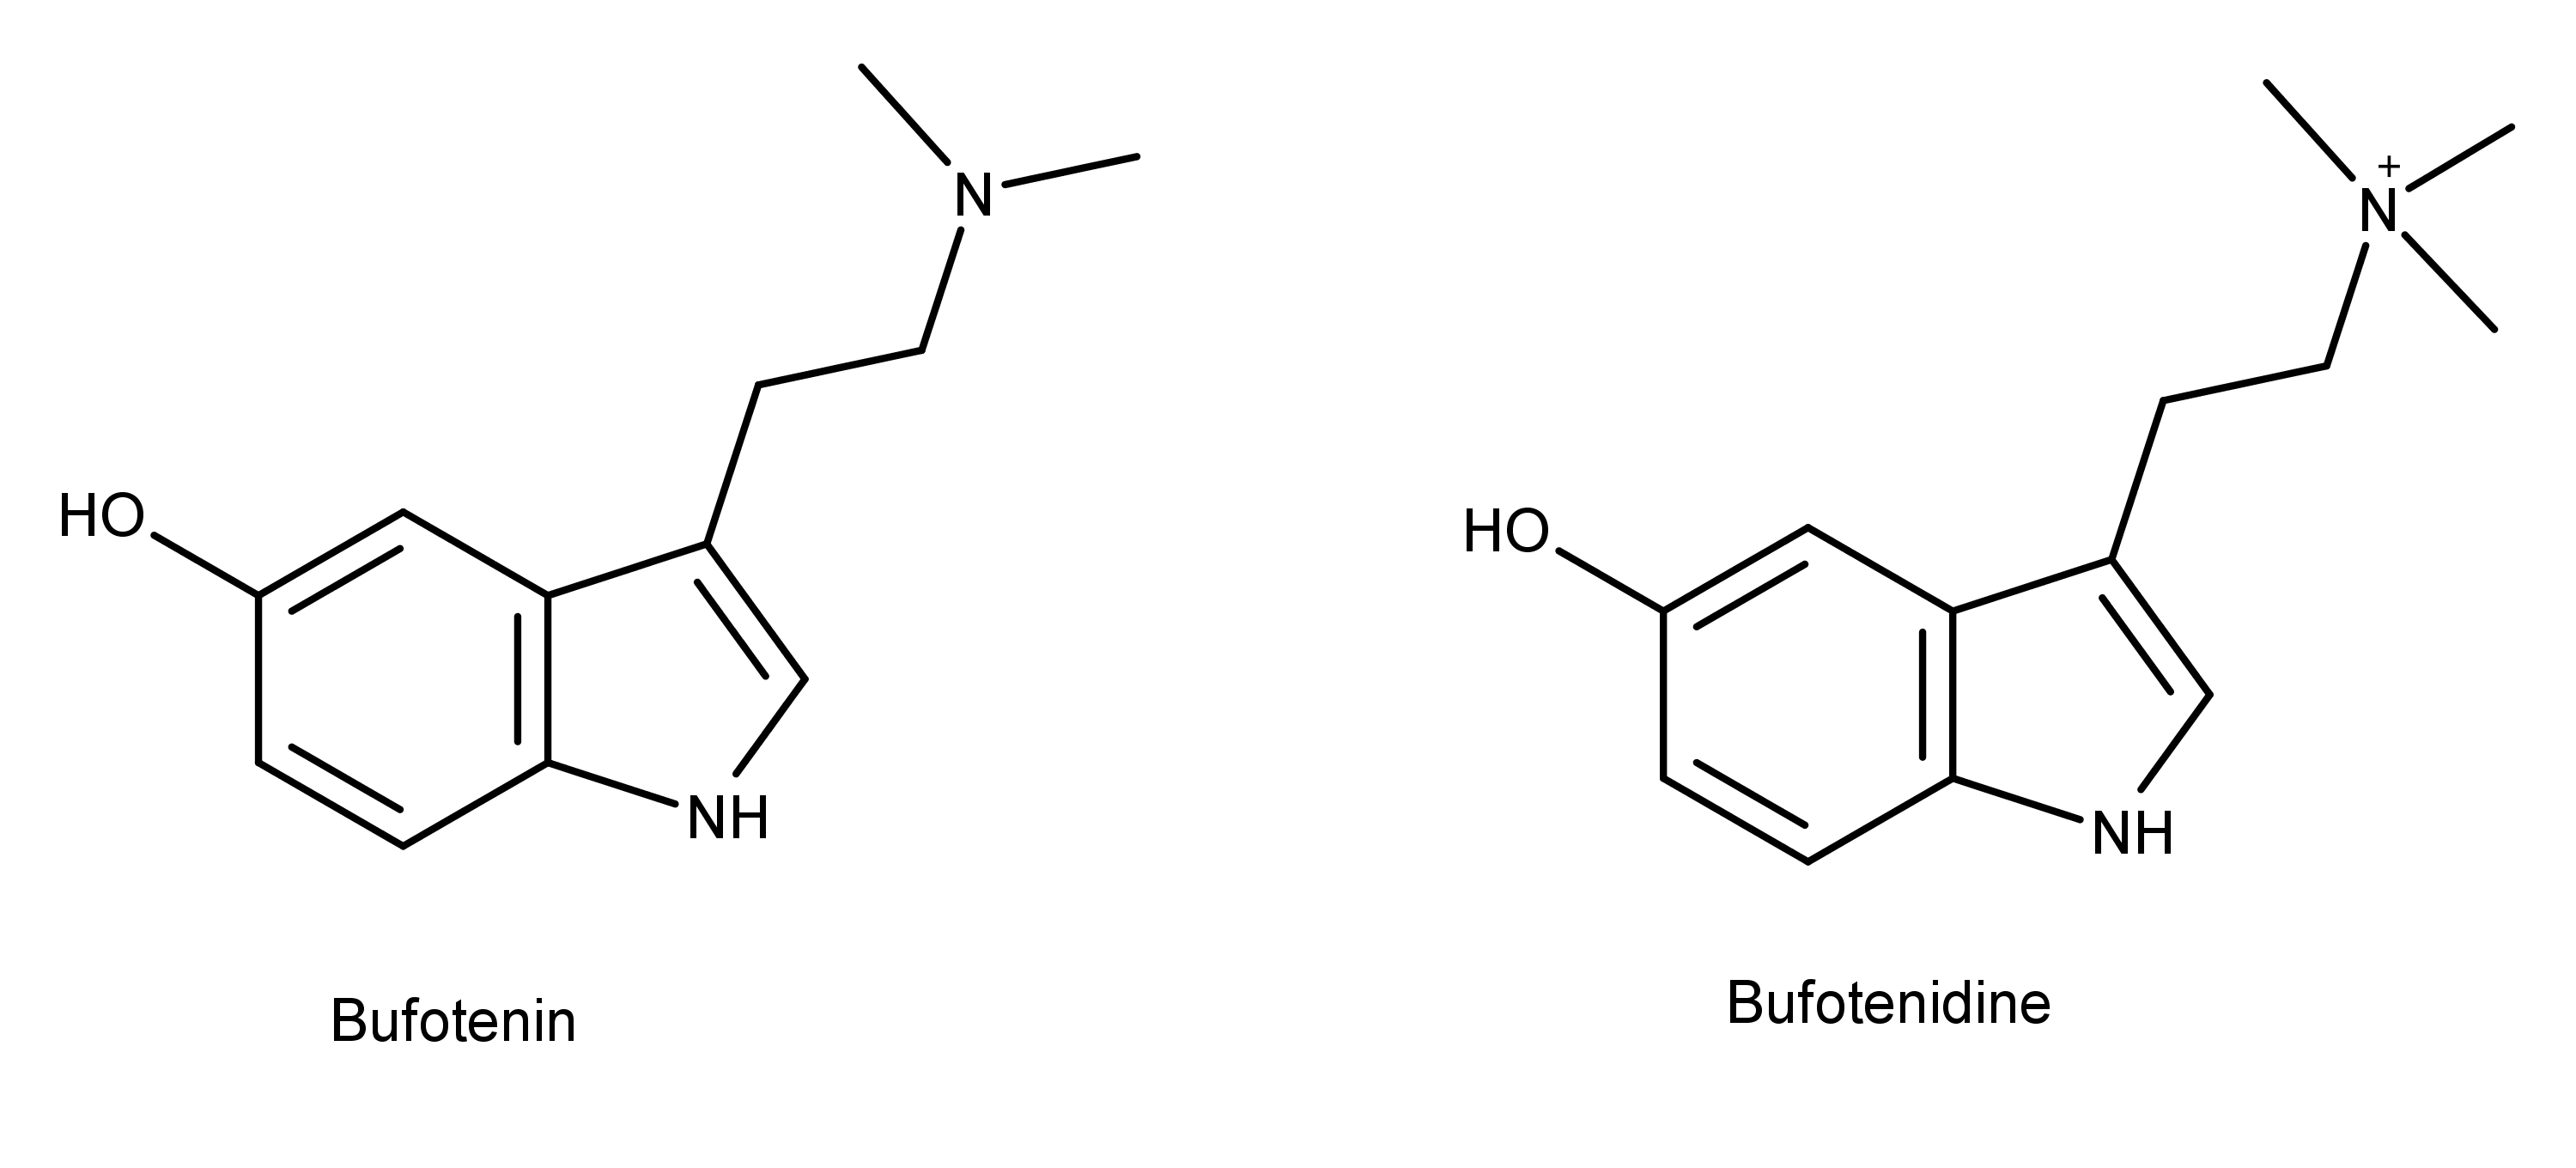 Structural Similarity to Bufotenin and Bufotenidine 